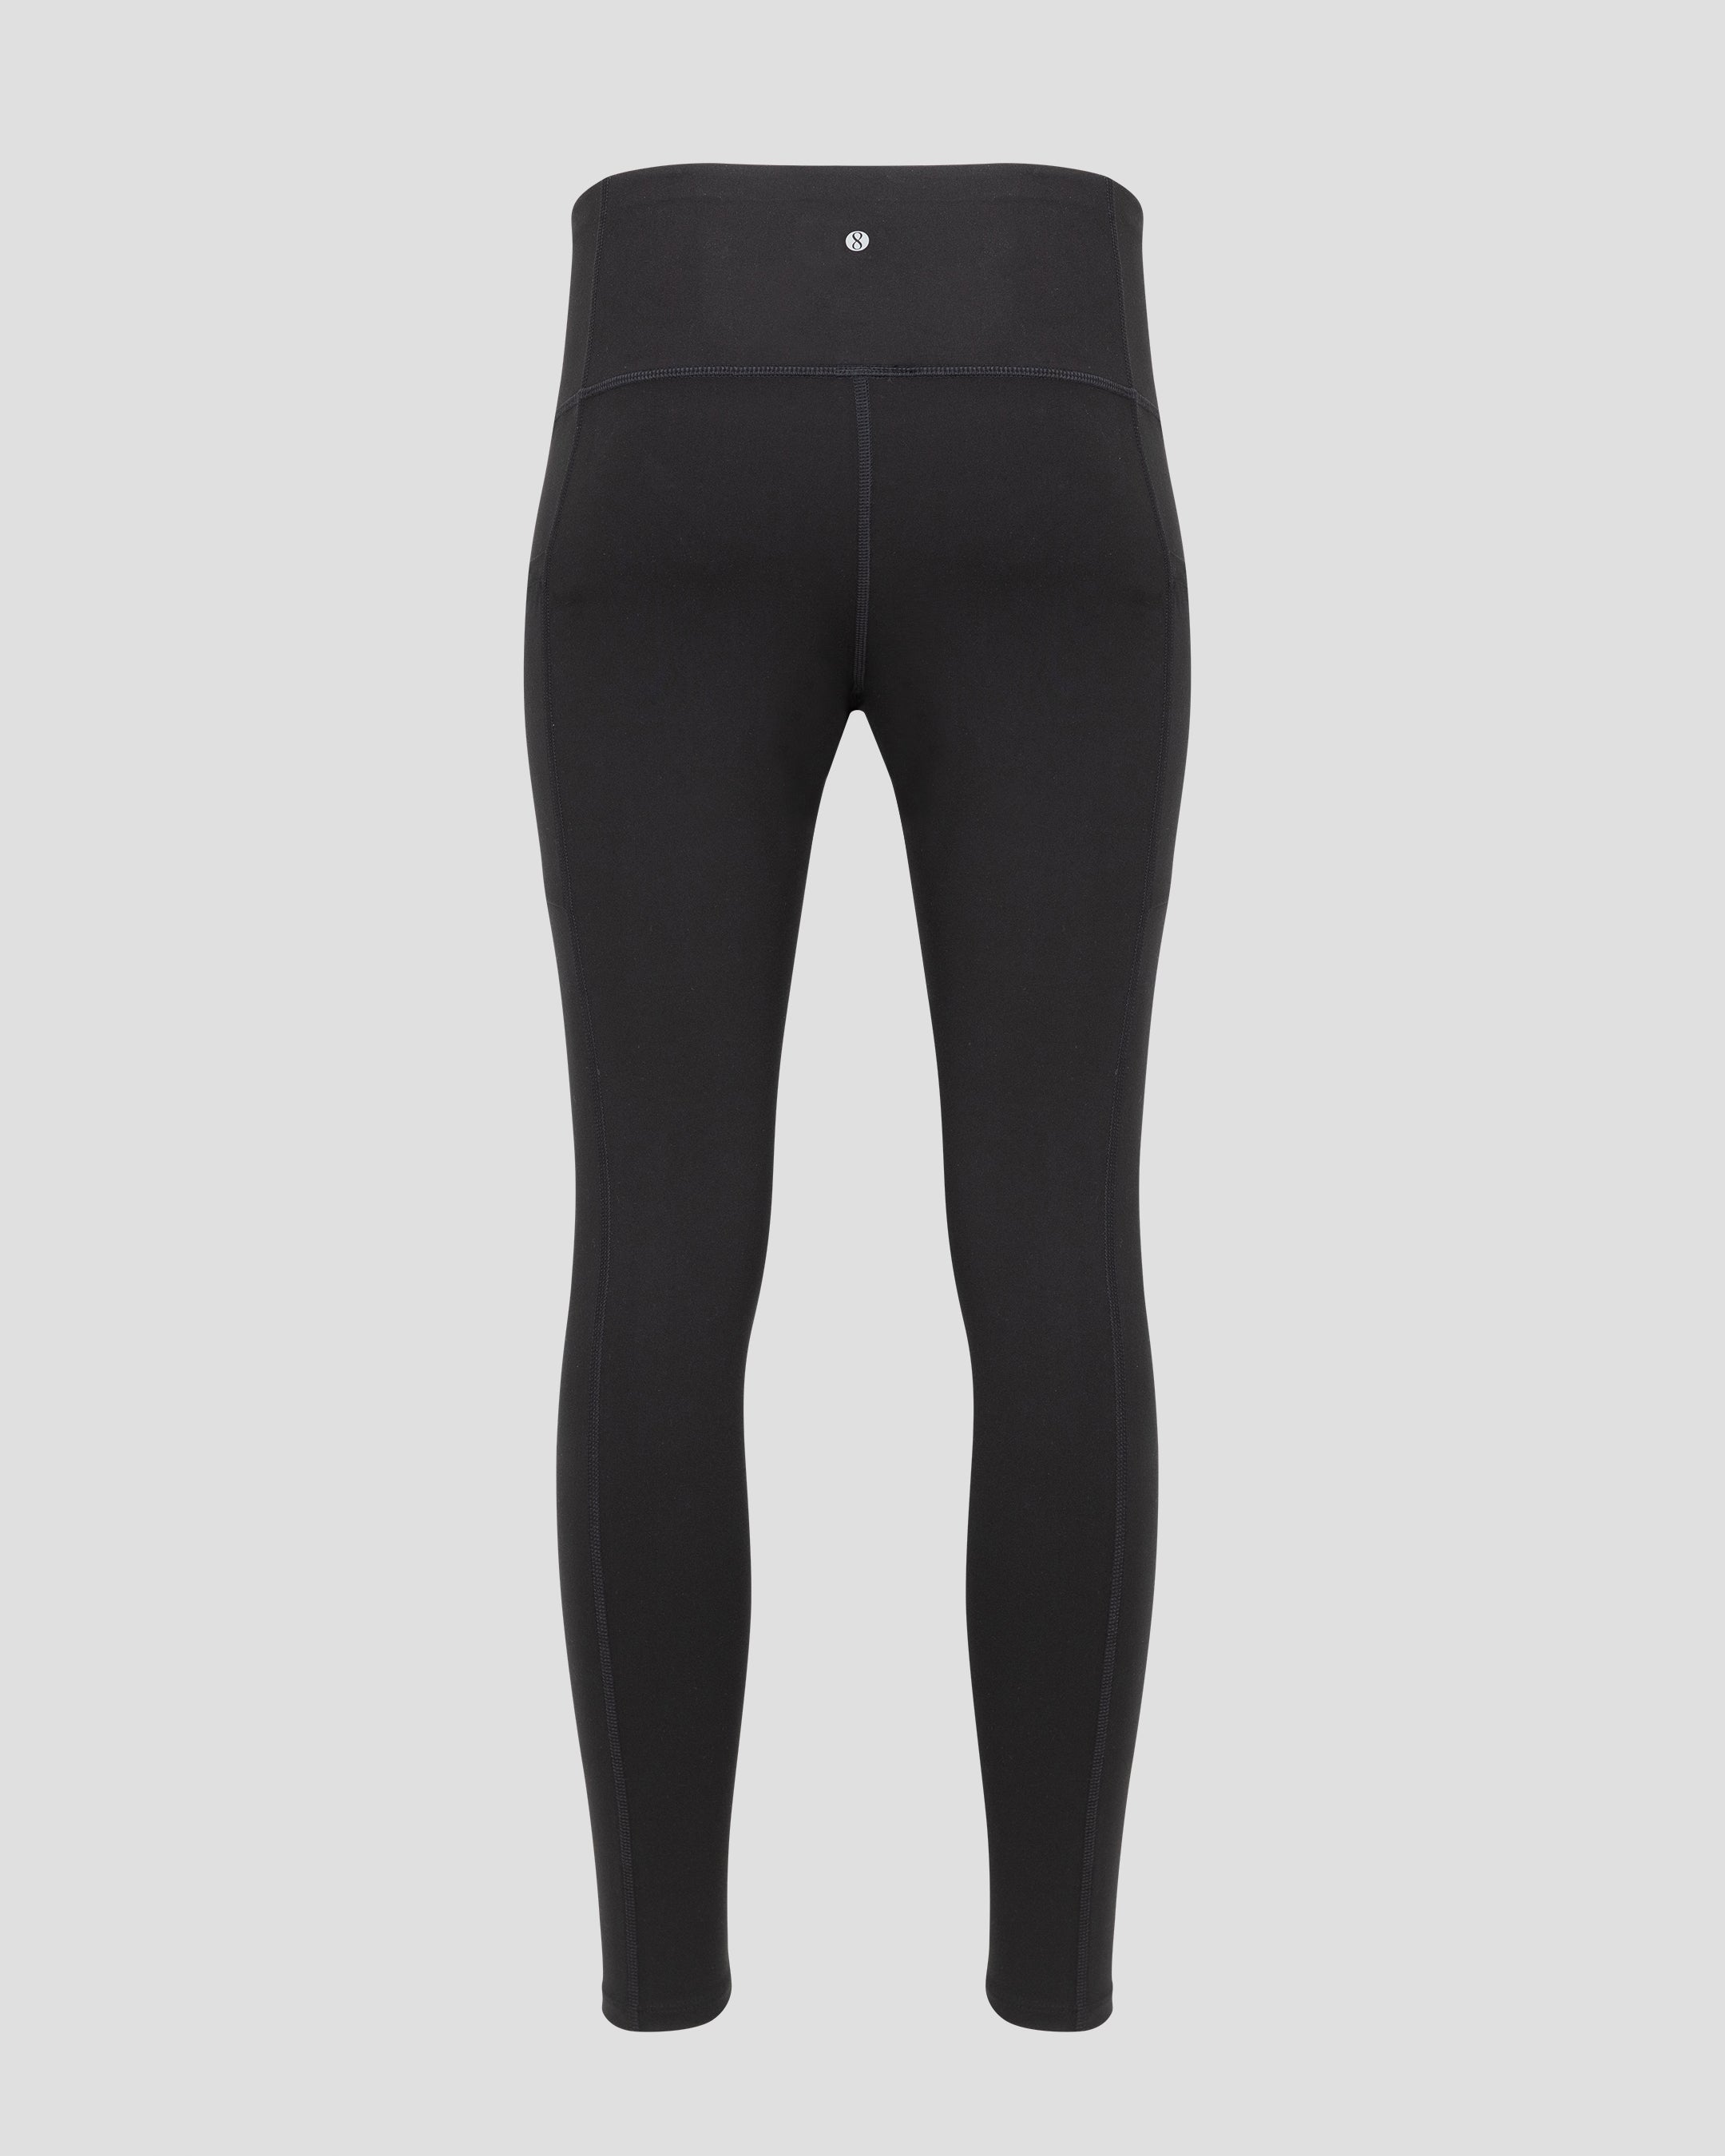 LULULEMON Yoga Pants Leggings Workout Black Grey Rainbow Colorful Logo -  Women 8